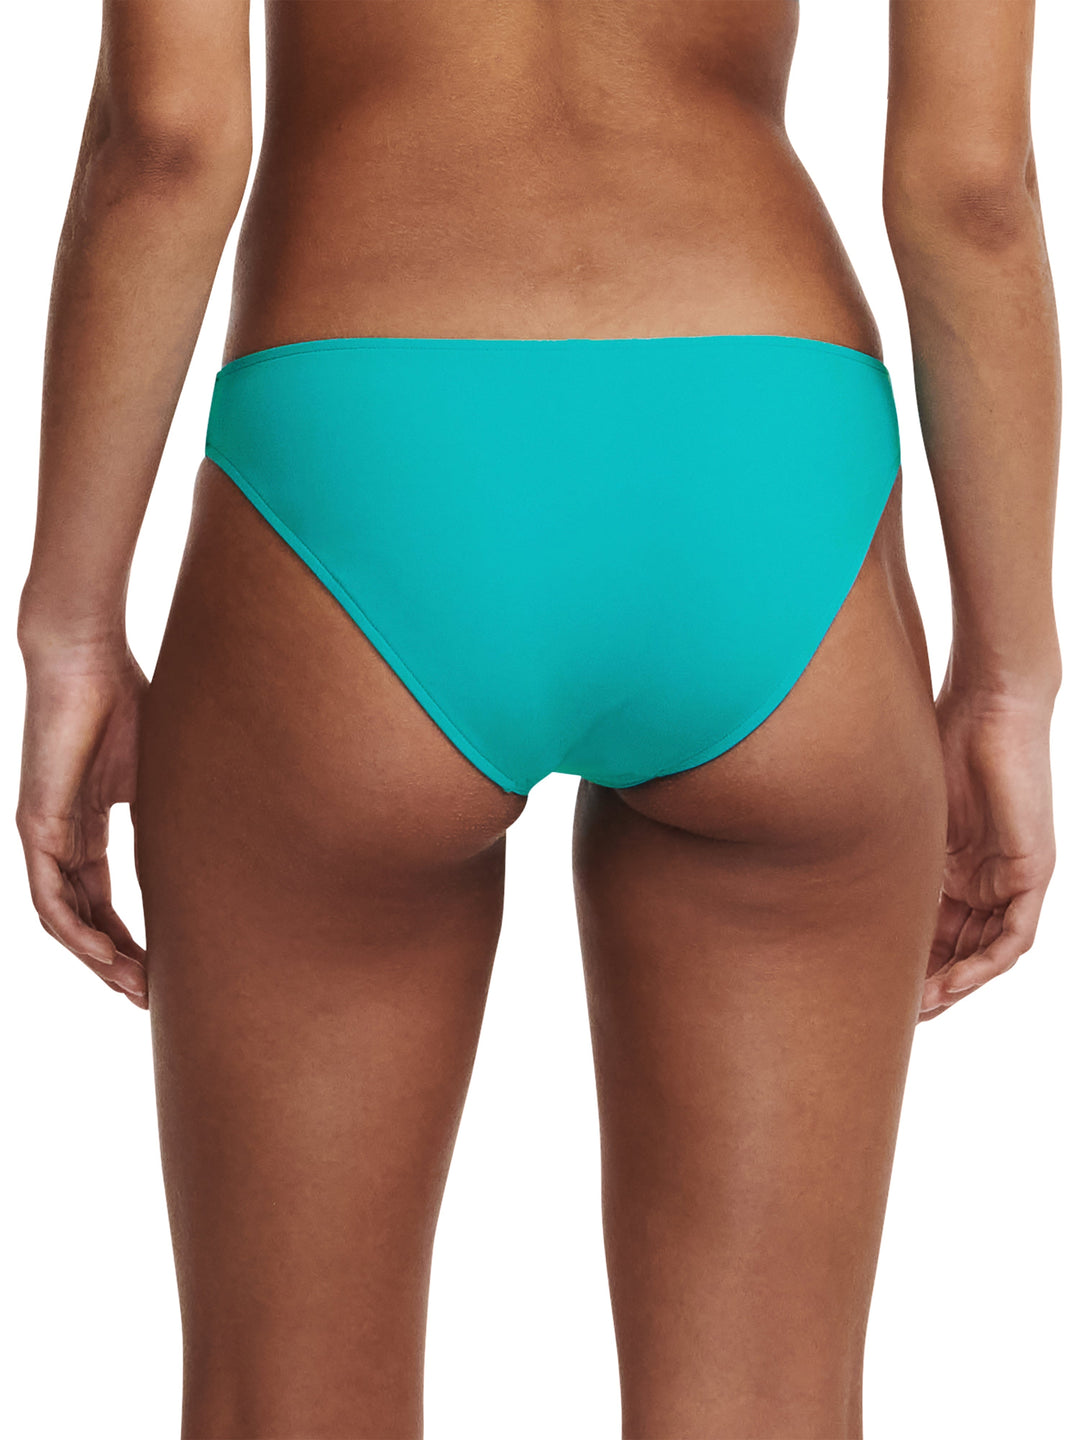 Bikini Chantelle Swimwear Emblem Slip - Bikini blu lago Chantelle